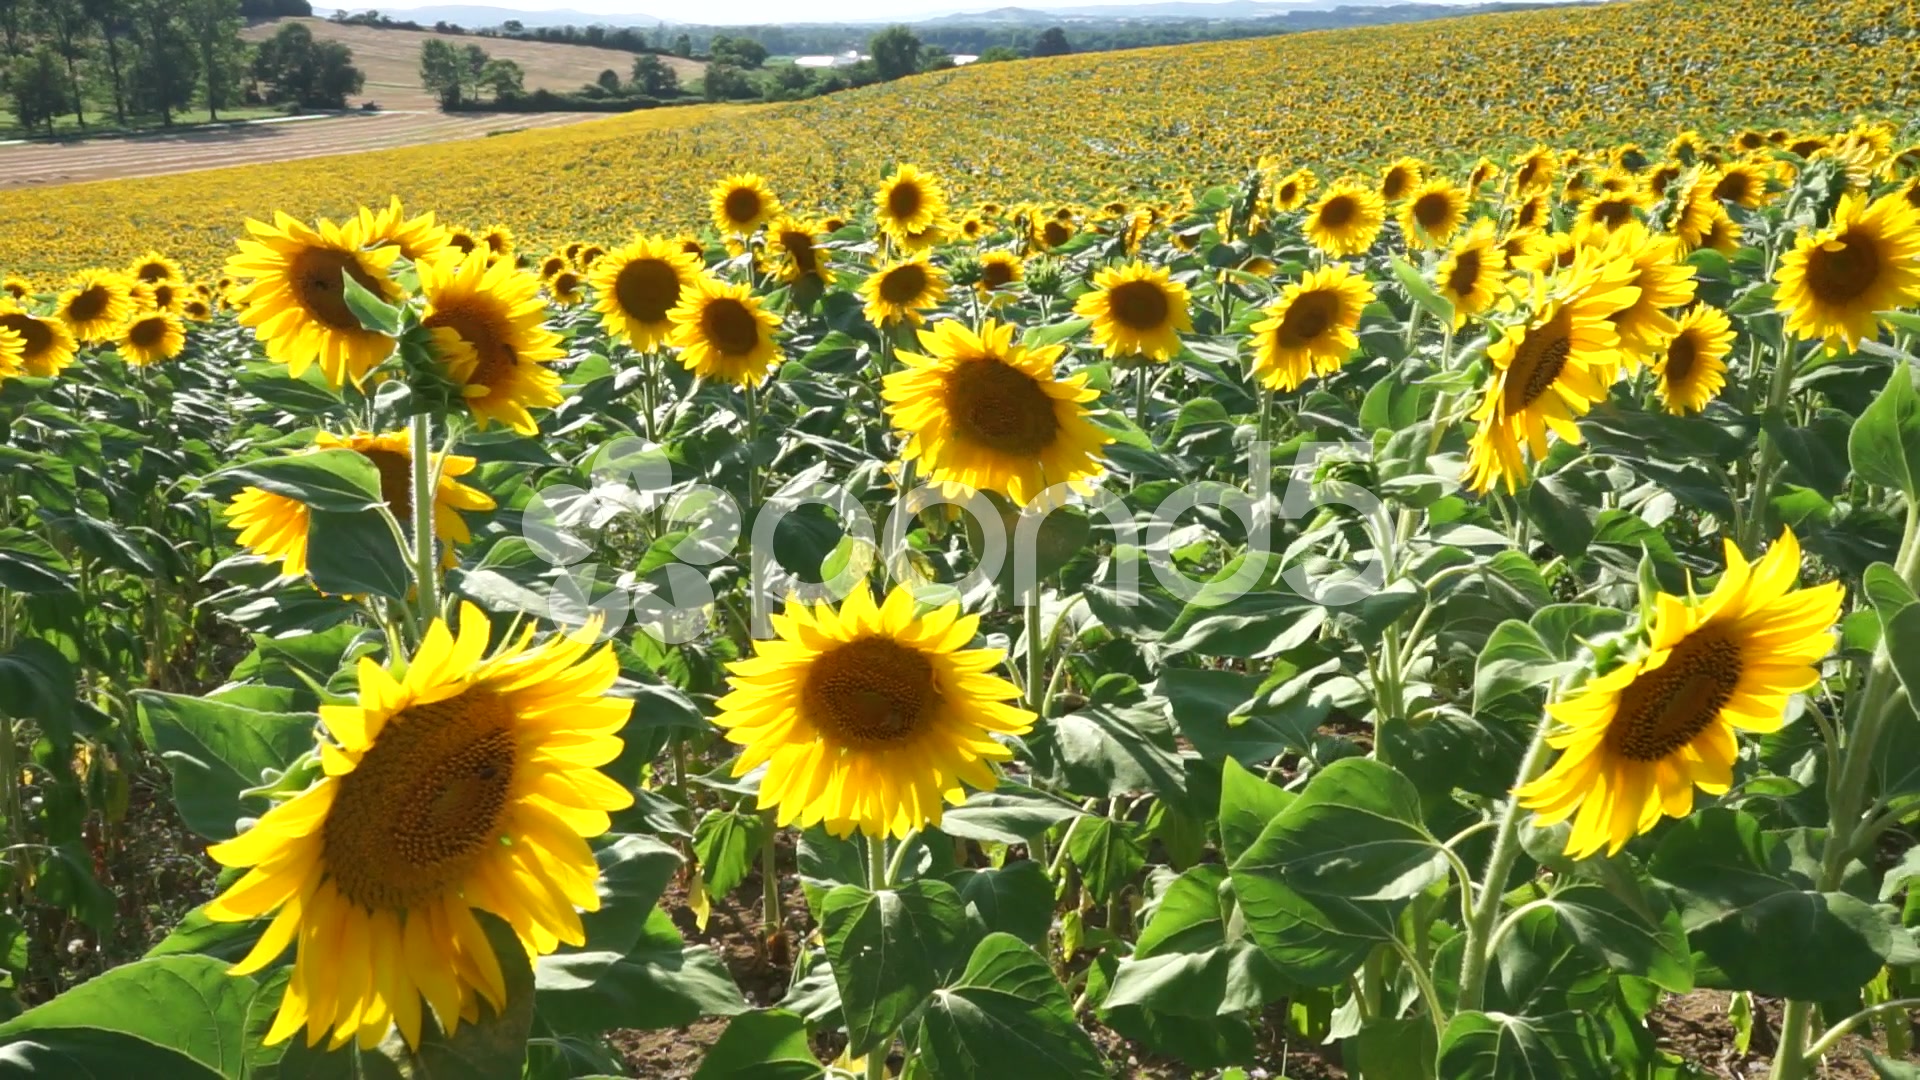 Sunflower field ~ HD & 4K Stock Footage #55778528 | Pond5